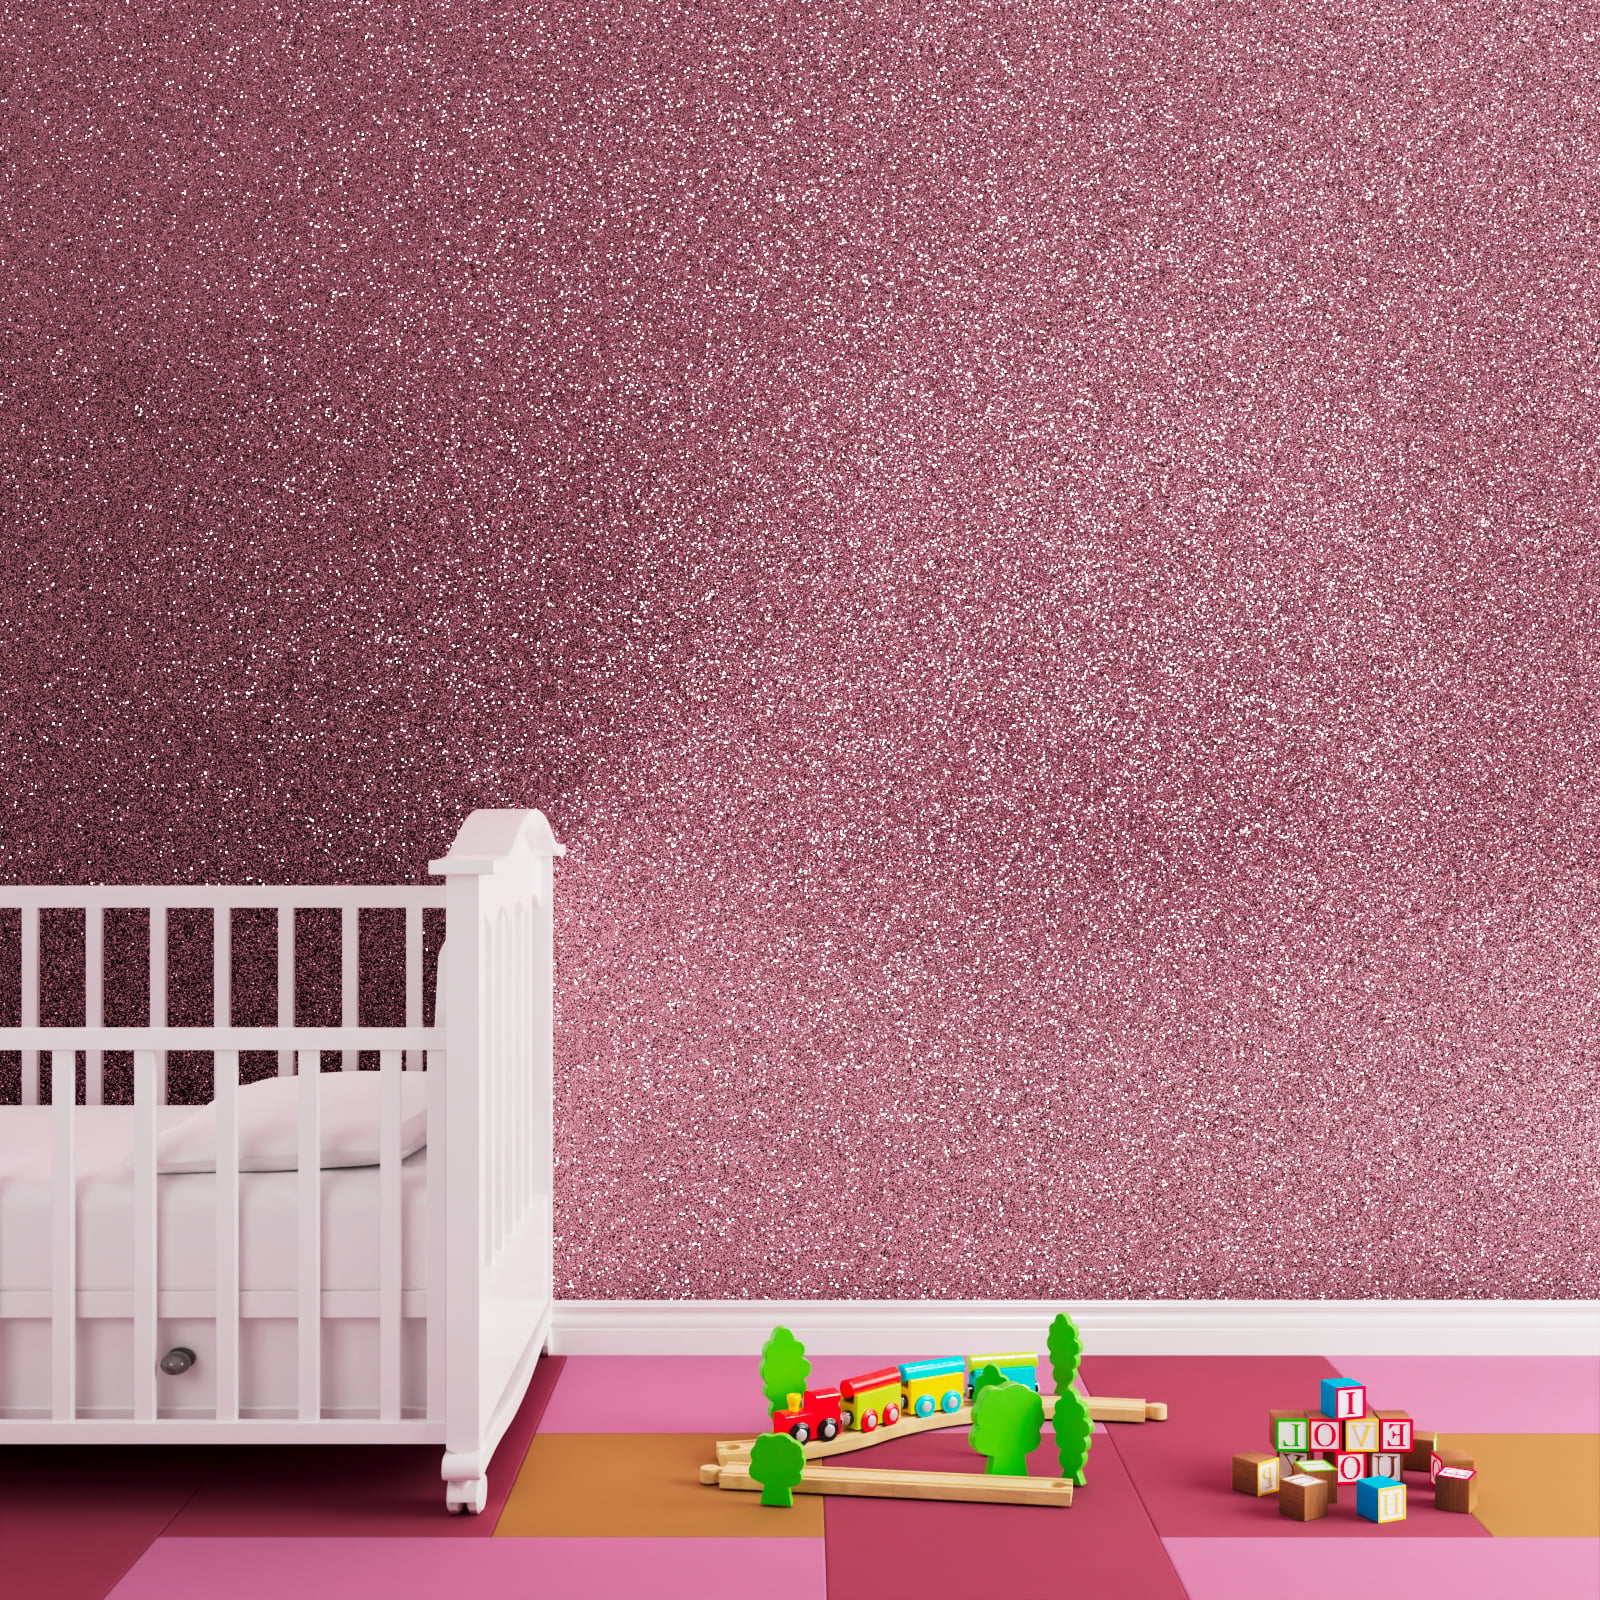 Stickyart Light Pink Glitter Wallpaper Peel and Stick Glitter Contact Paper Decorative Self Adhesive Glitter Fabric Wallpaper Roll Removable Sparkle